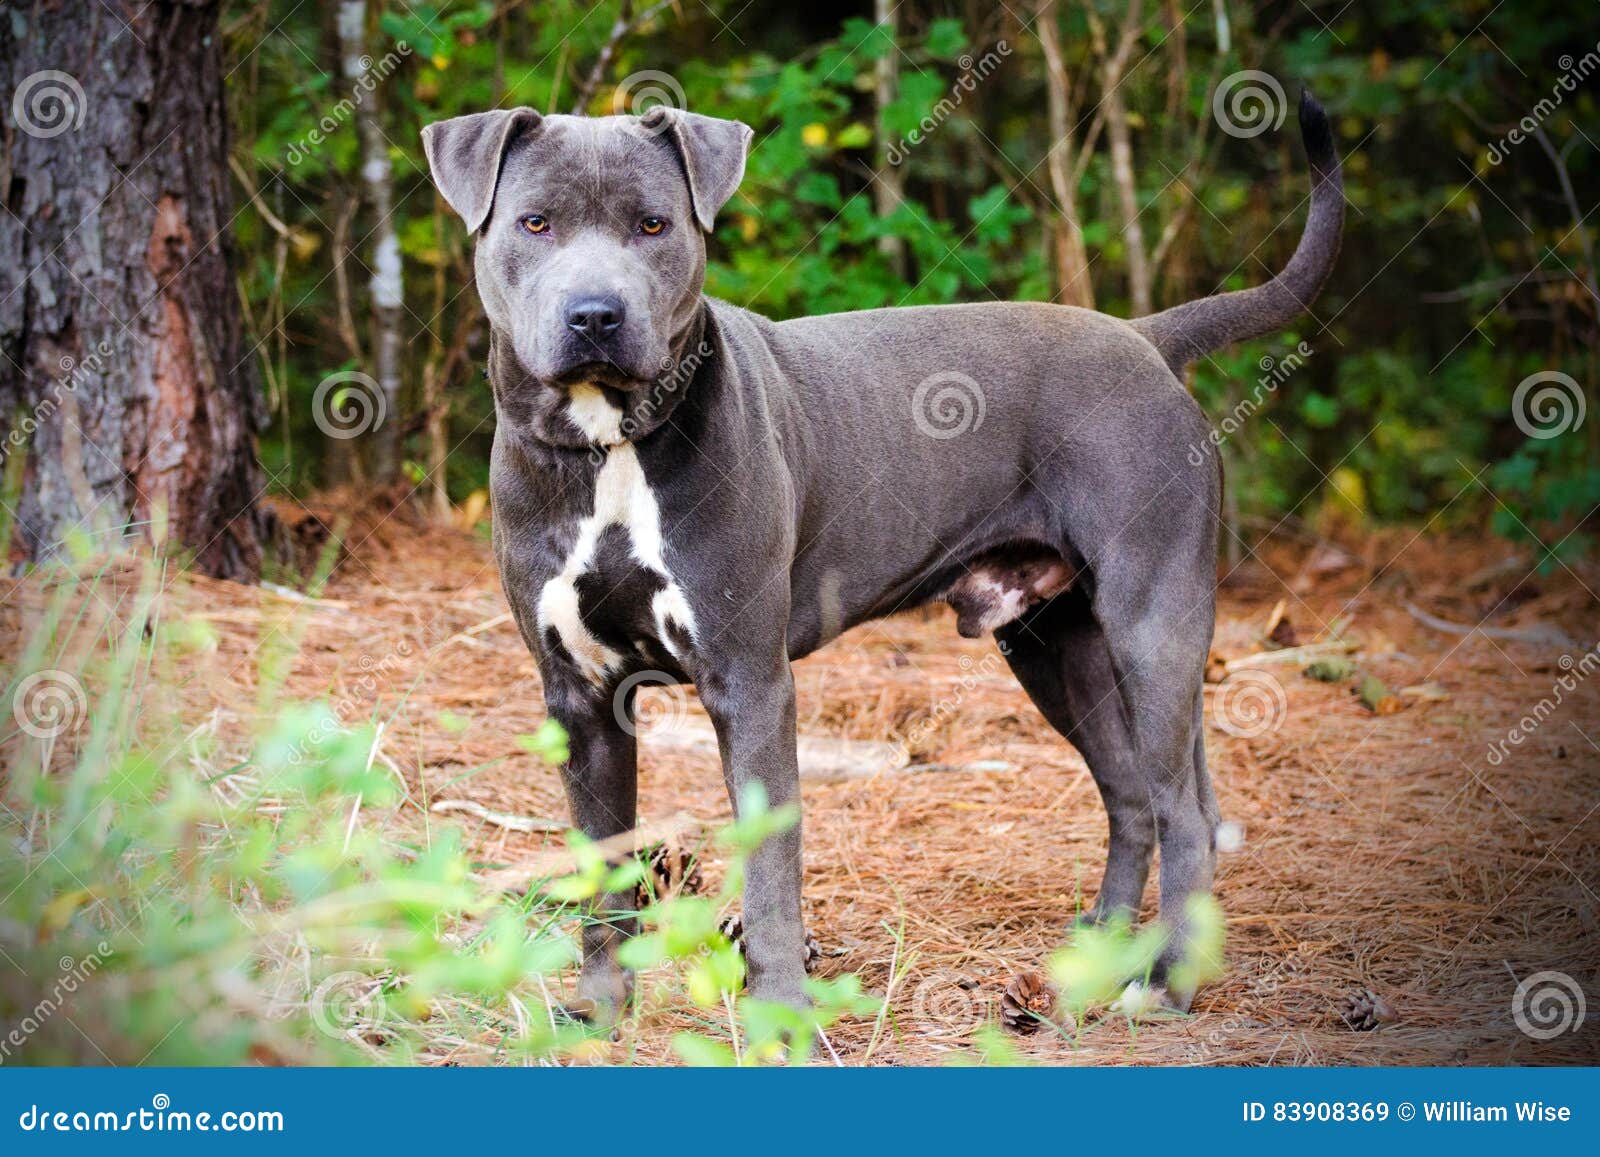 Blue American Pit Bull Terrier Dog Portrait Stock Image